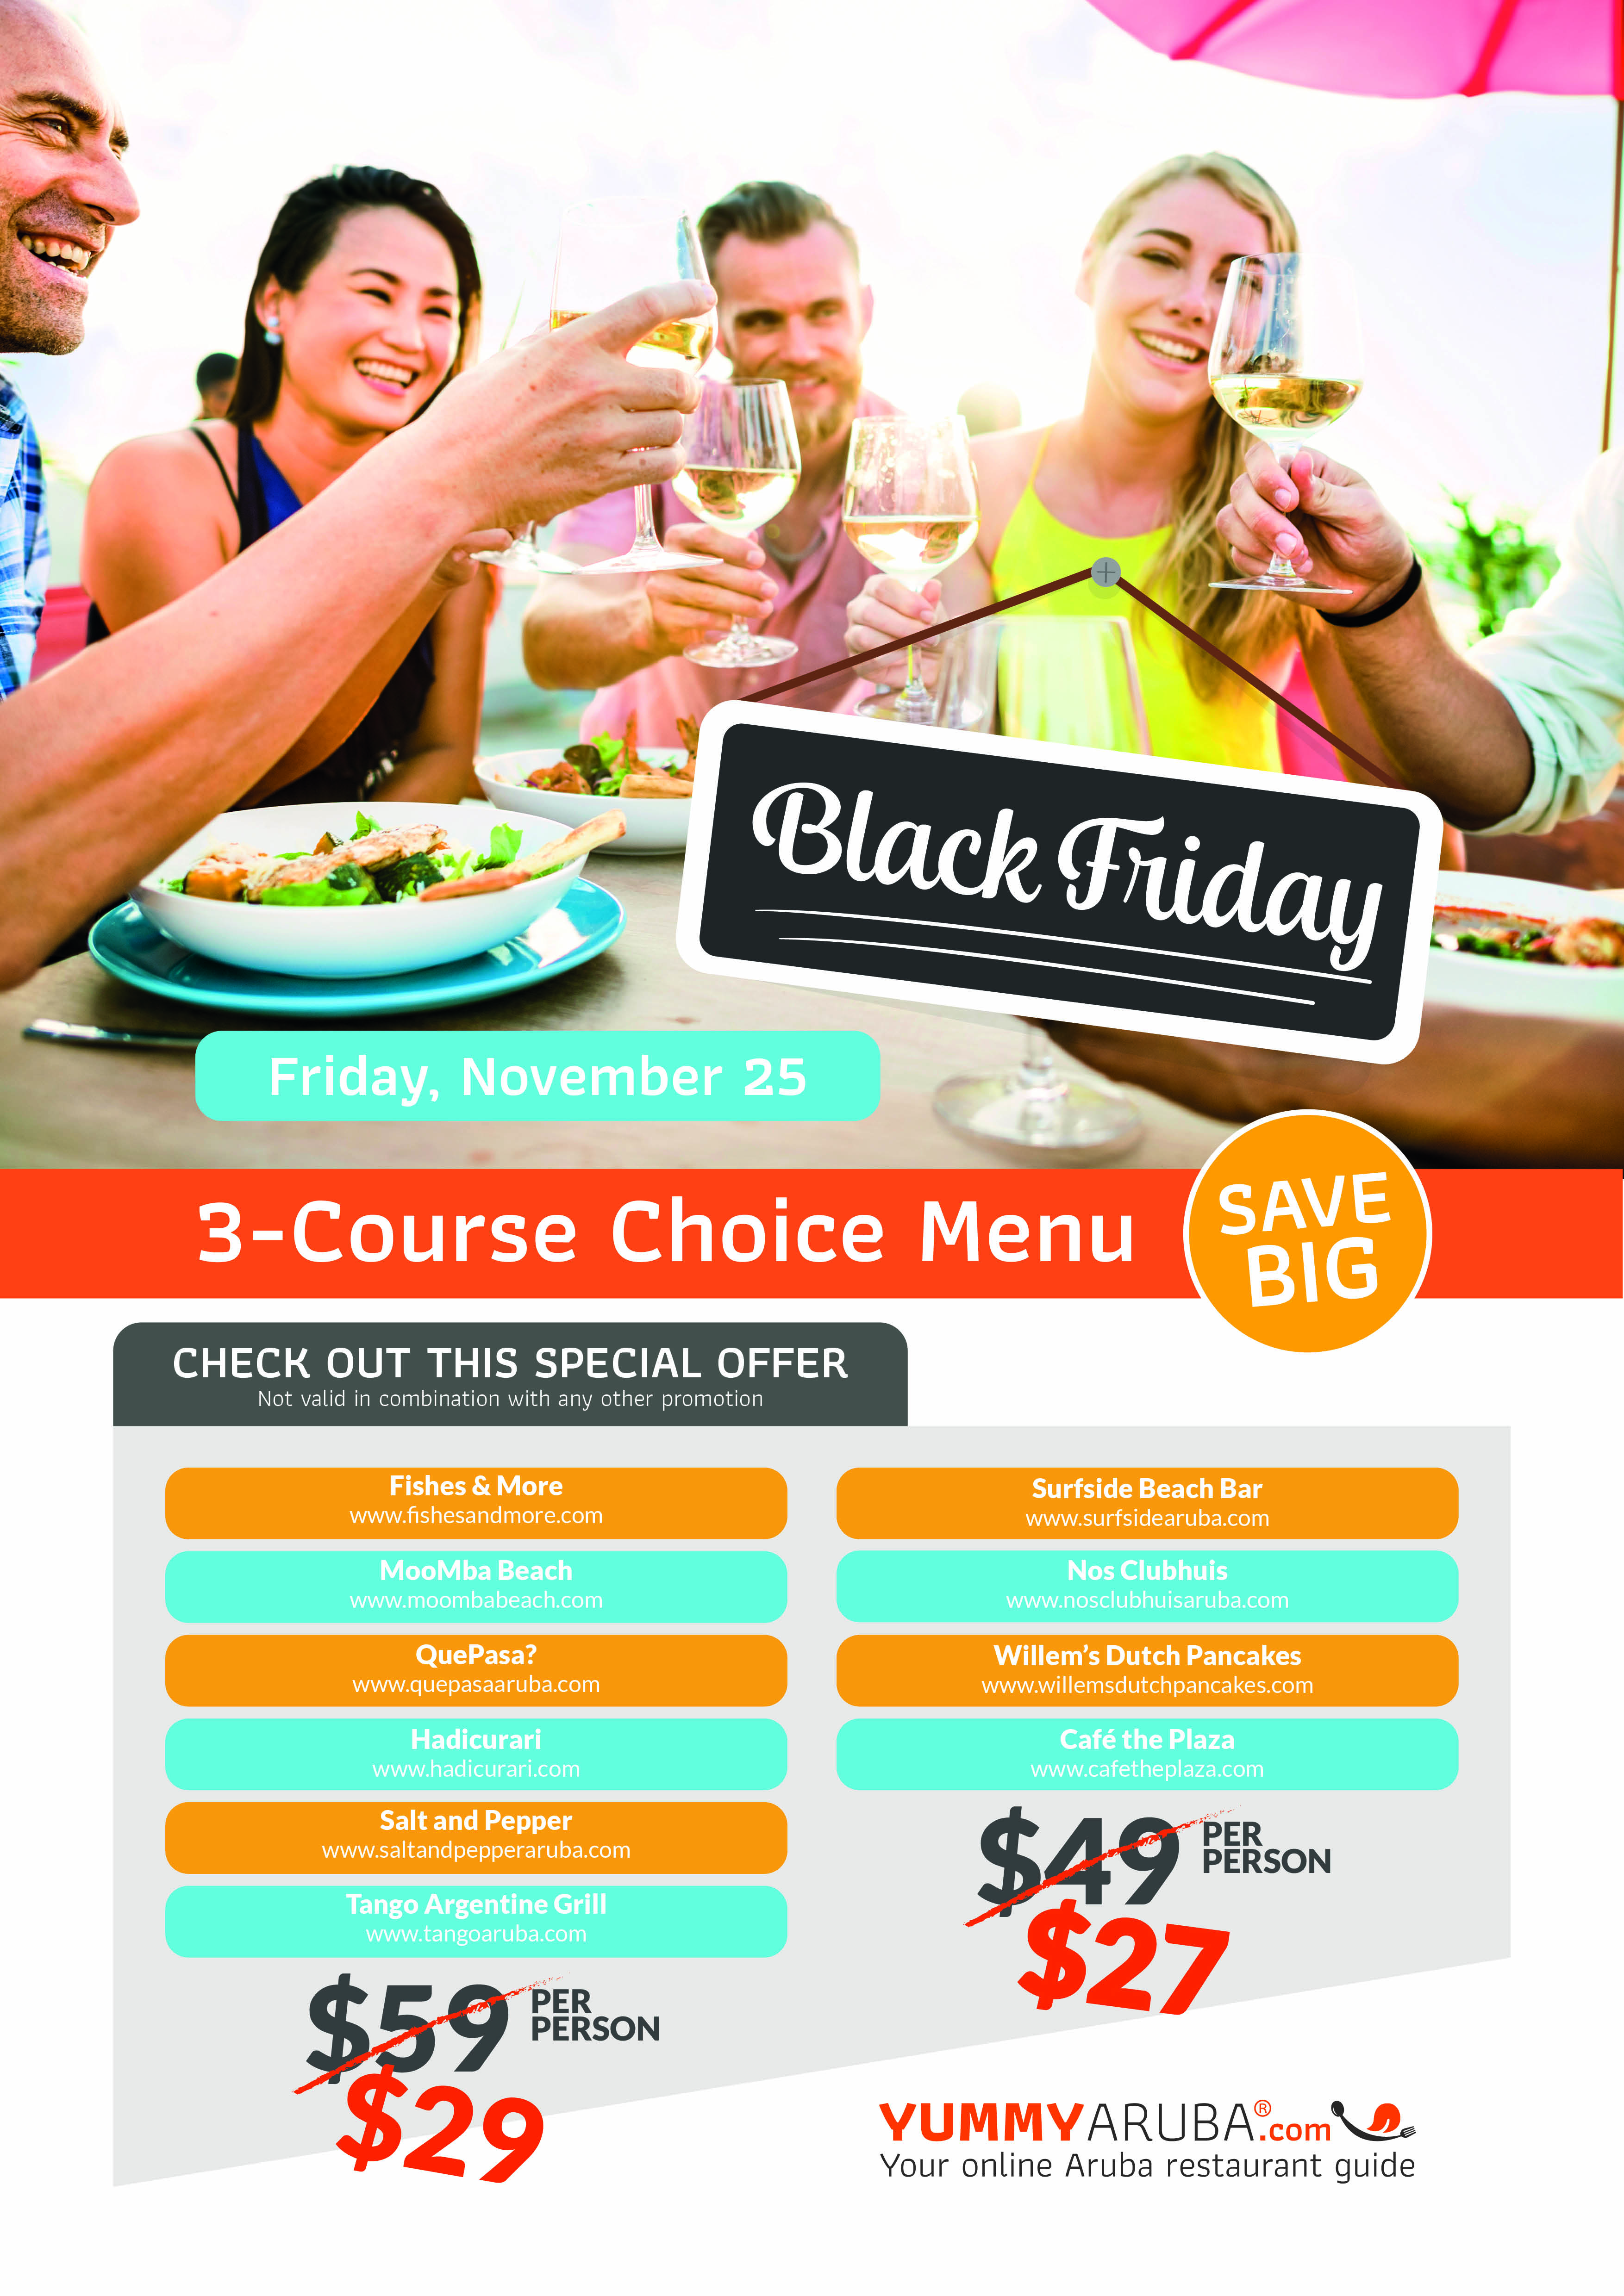 black friday. deals. culinary. menu. save money. cheap. good price. restaurants.